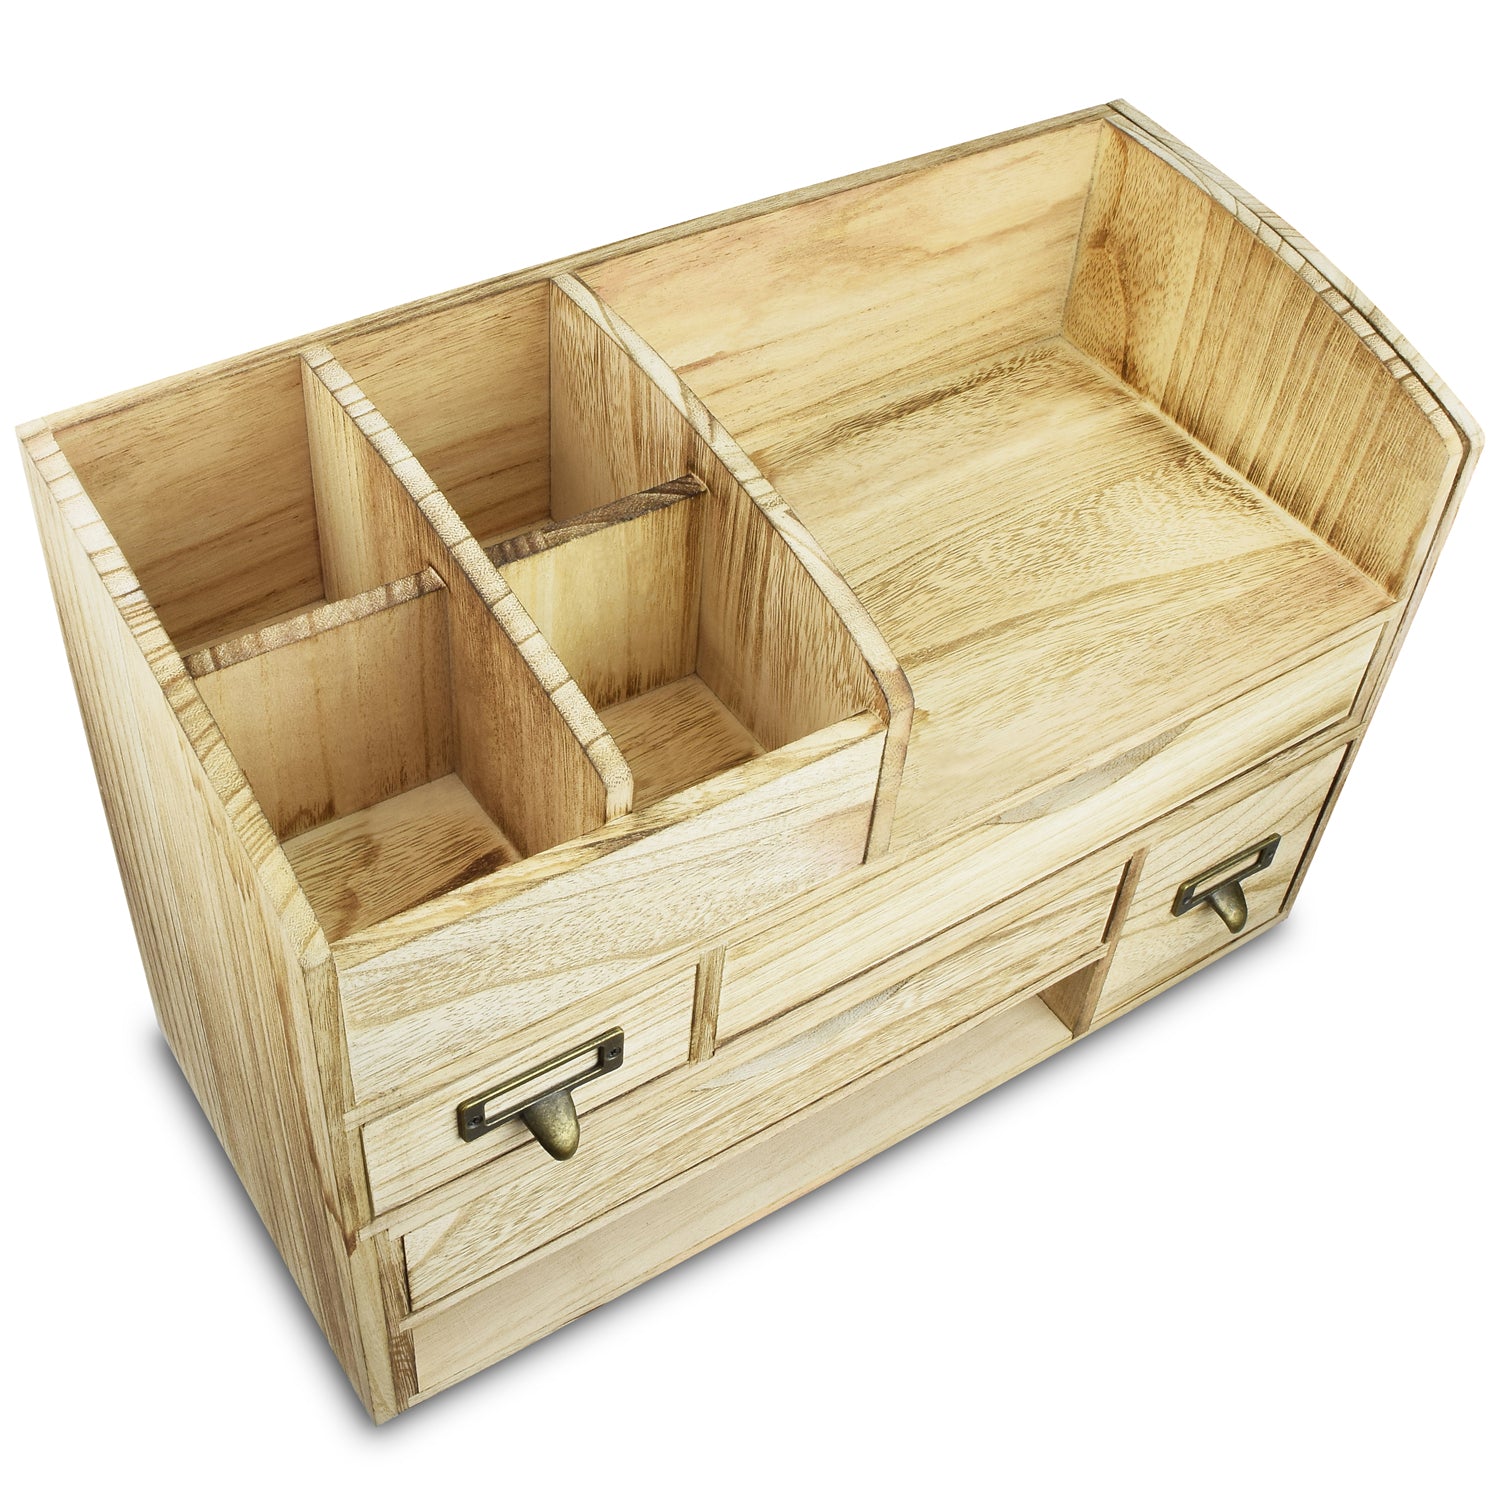 Ikee Design® Adjustable Wooden Desktop Organizer Office Supplies Storage Shelf Rack